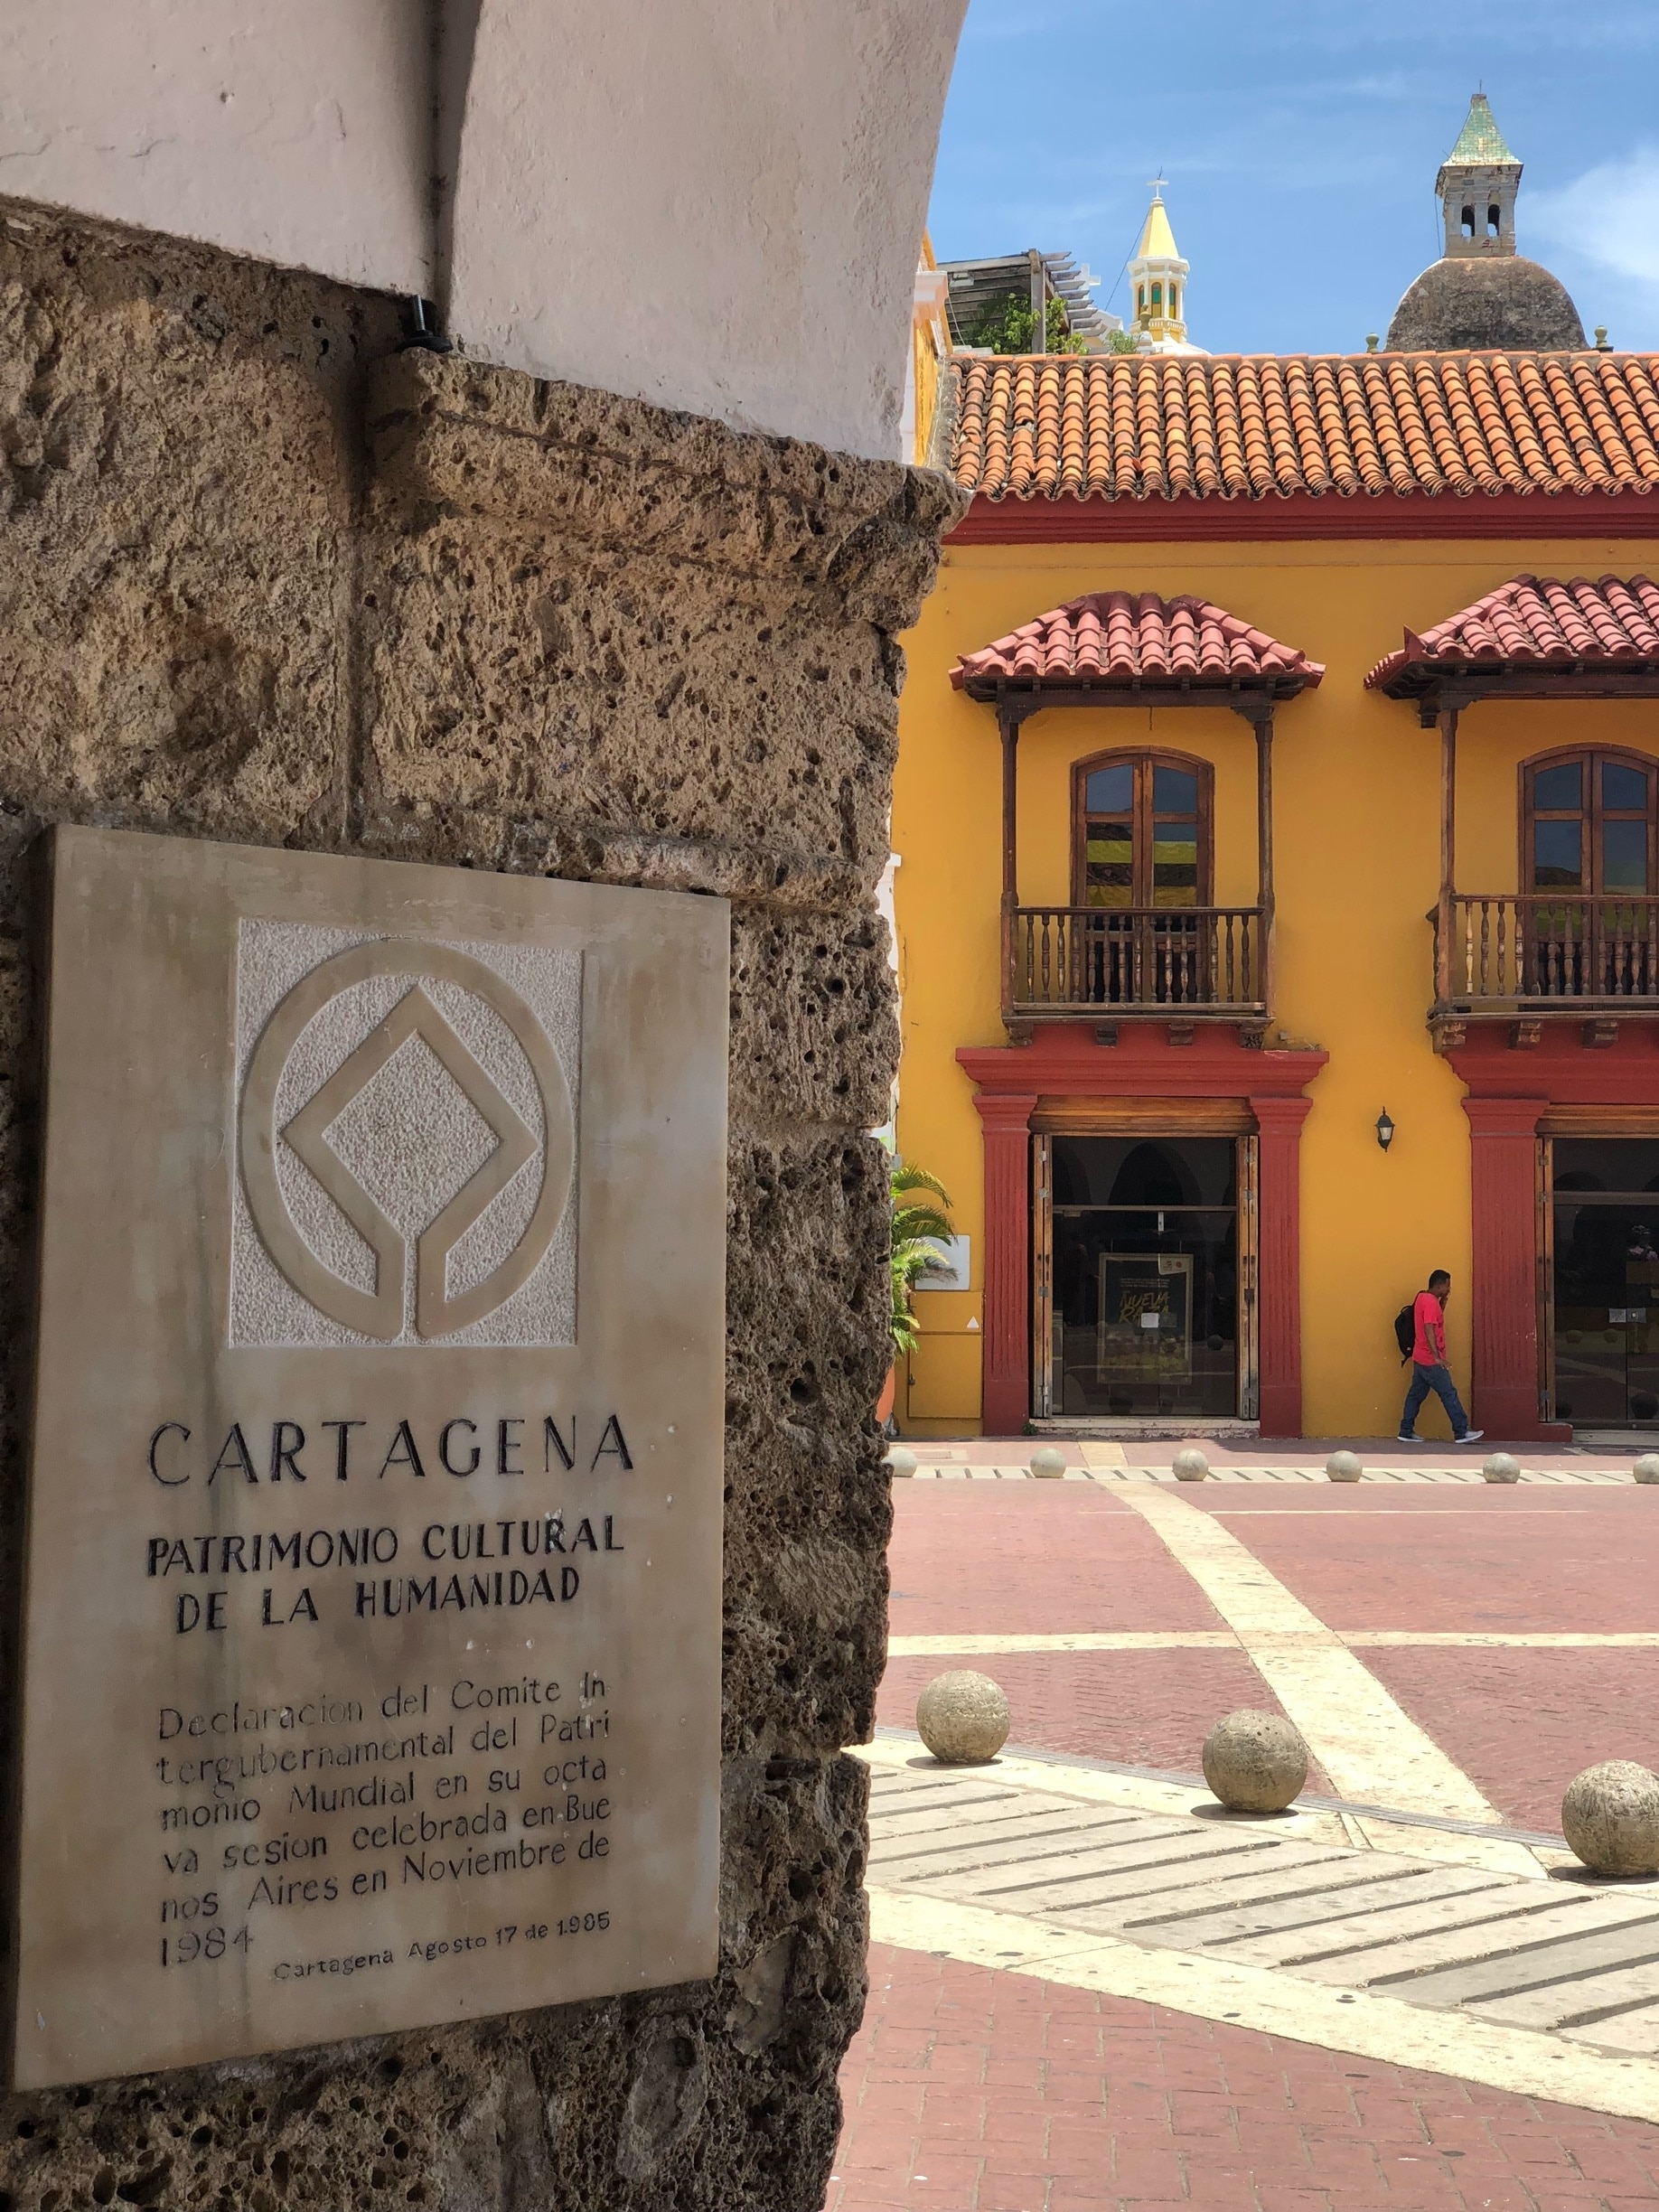 Cartagena was declared UNESCO site since 1984